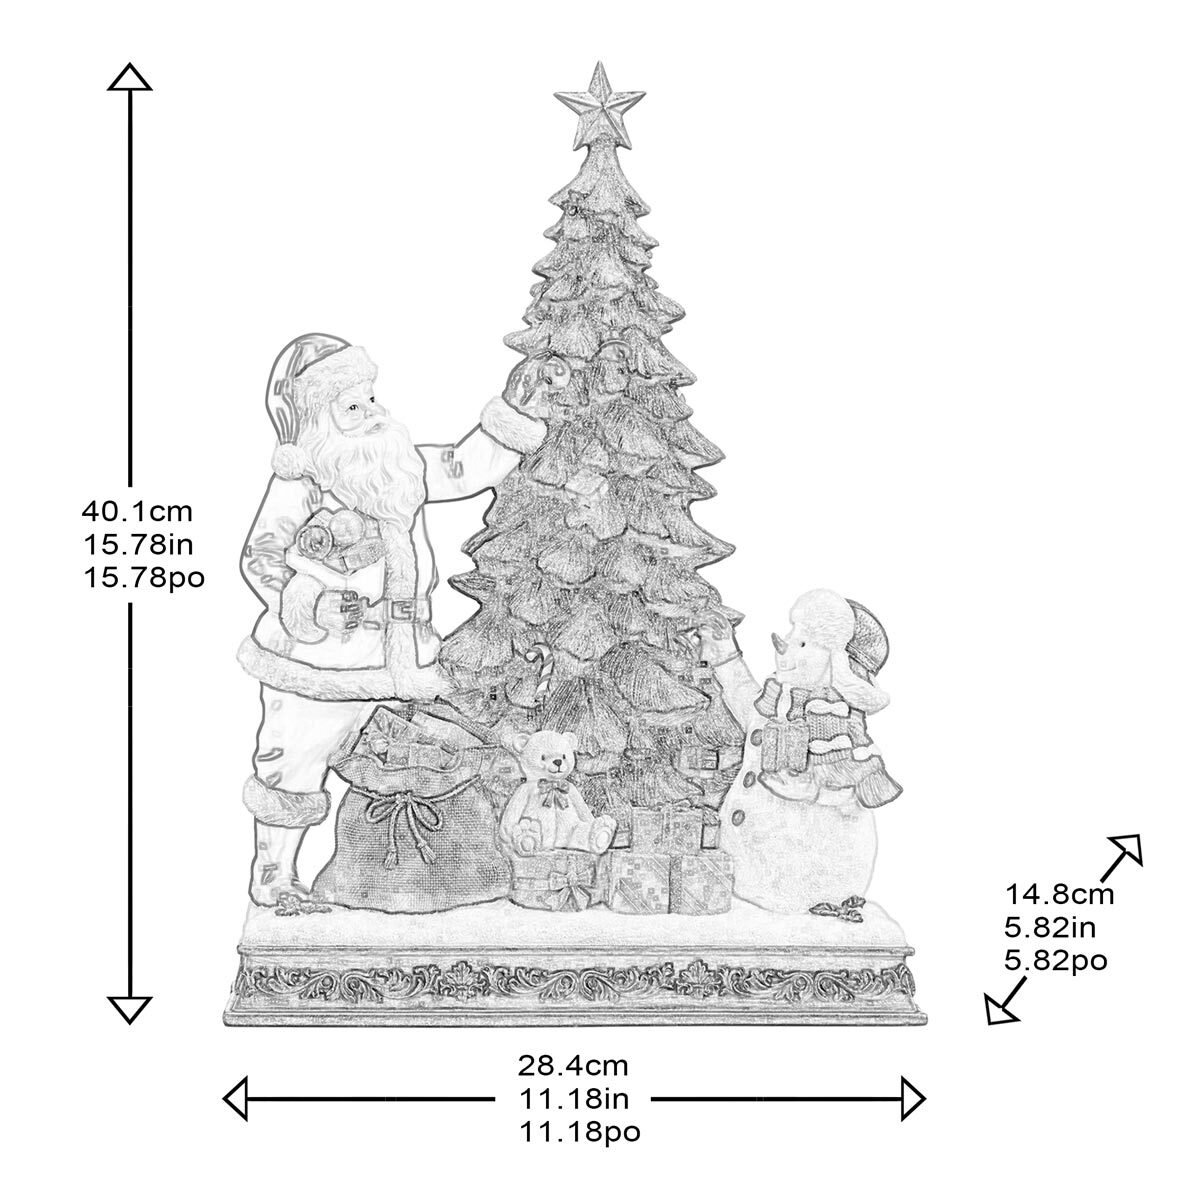 Buy Santa & Snowman w/ Tree Dimensions Image at Costco.co.uk